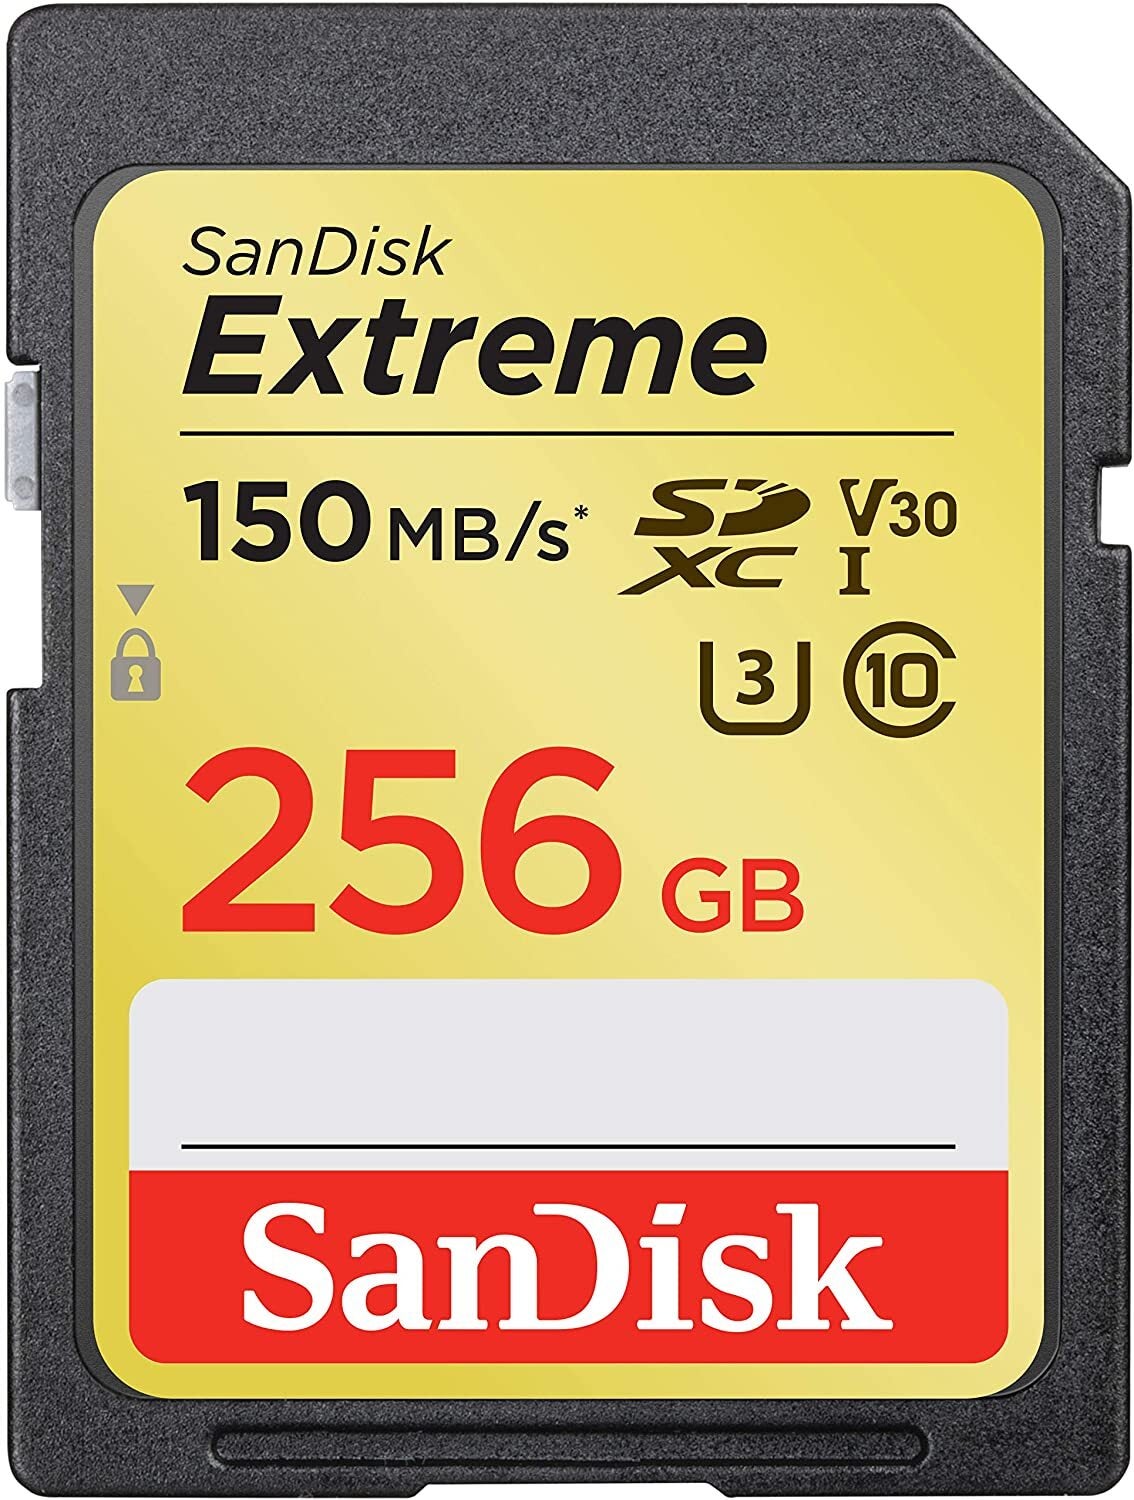 SanDisk Extreme 256GB SDXC UHS-I SD Card